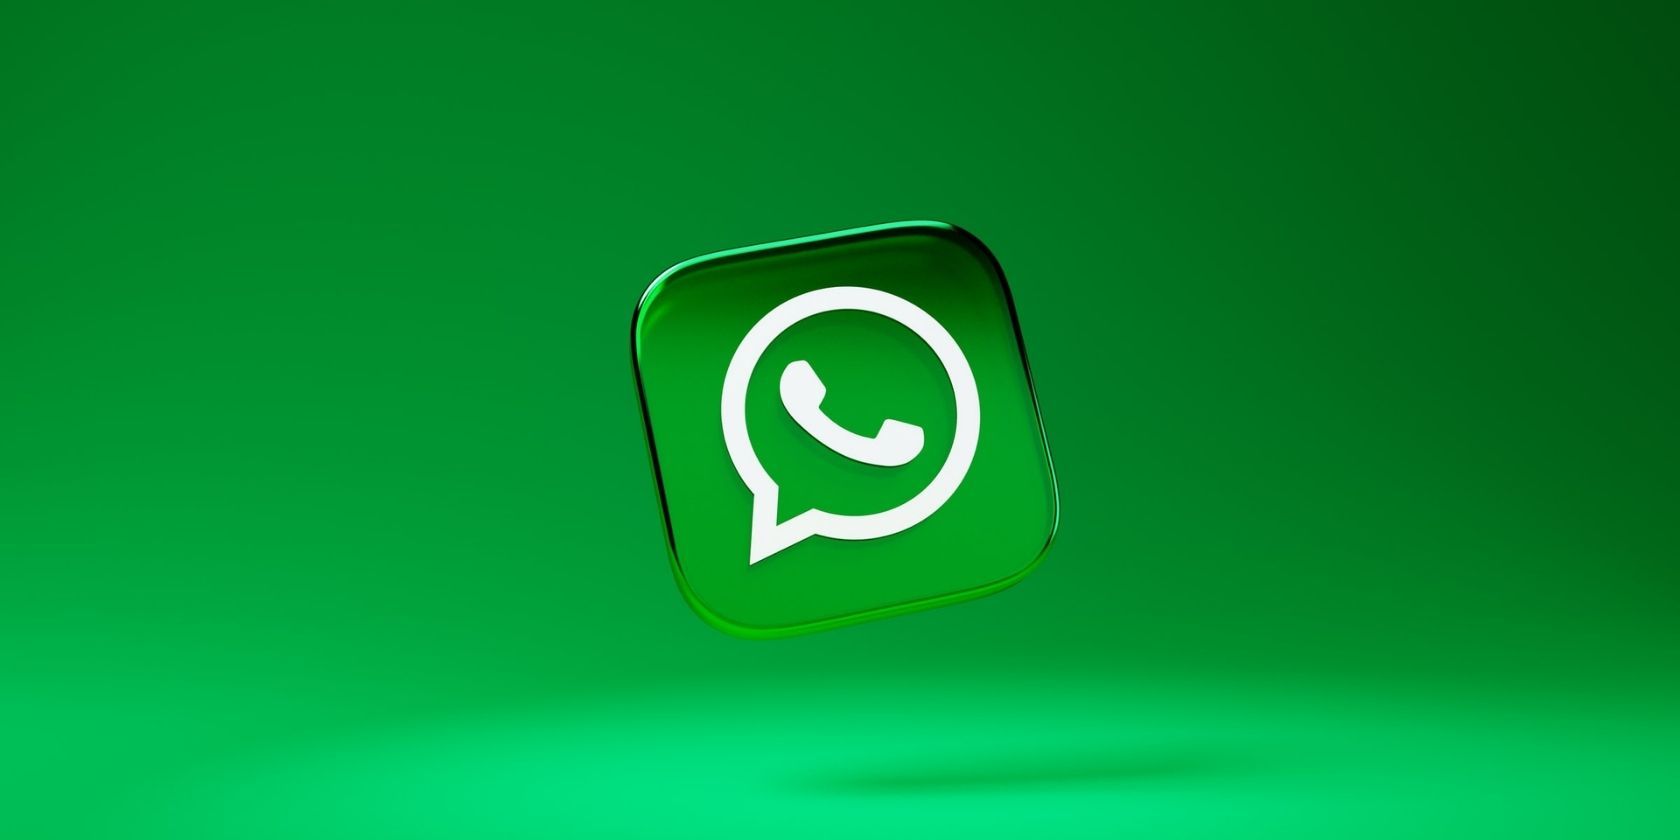 3D WhatsApp logo tilted against a green background